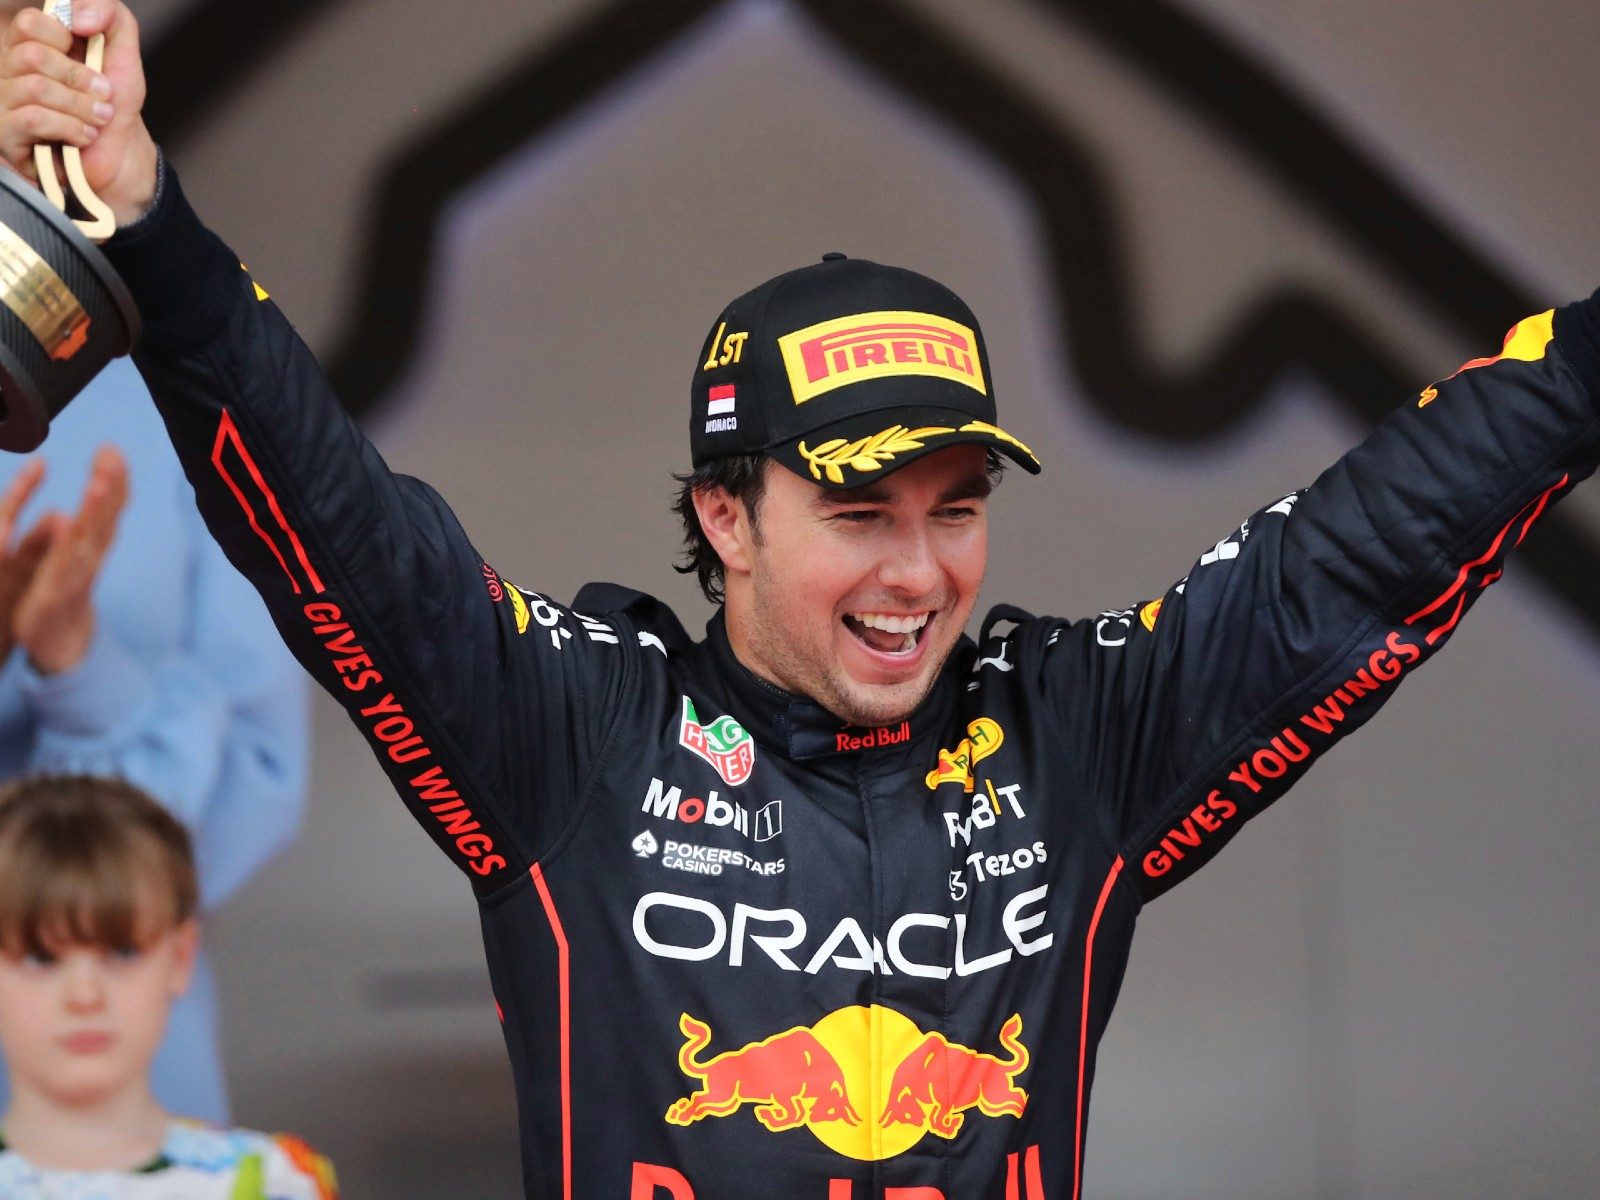 Perez wins dramatic wet-dry F1 Monaco GP - SHINE News